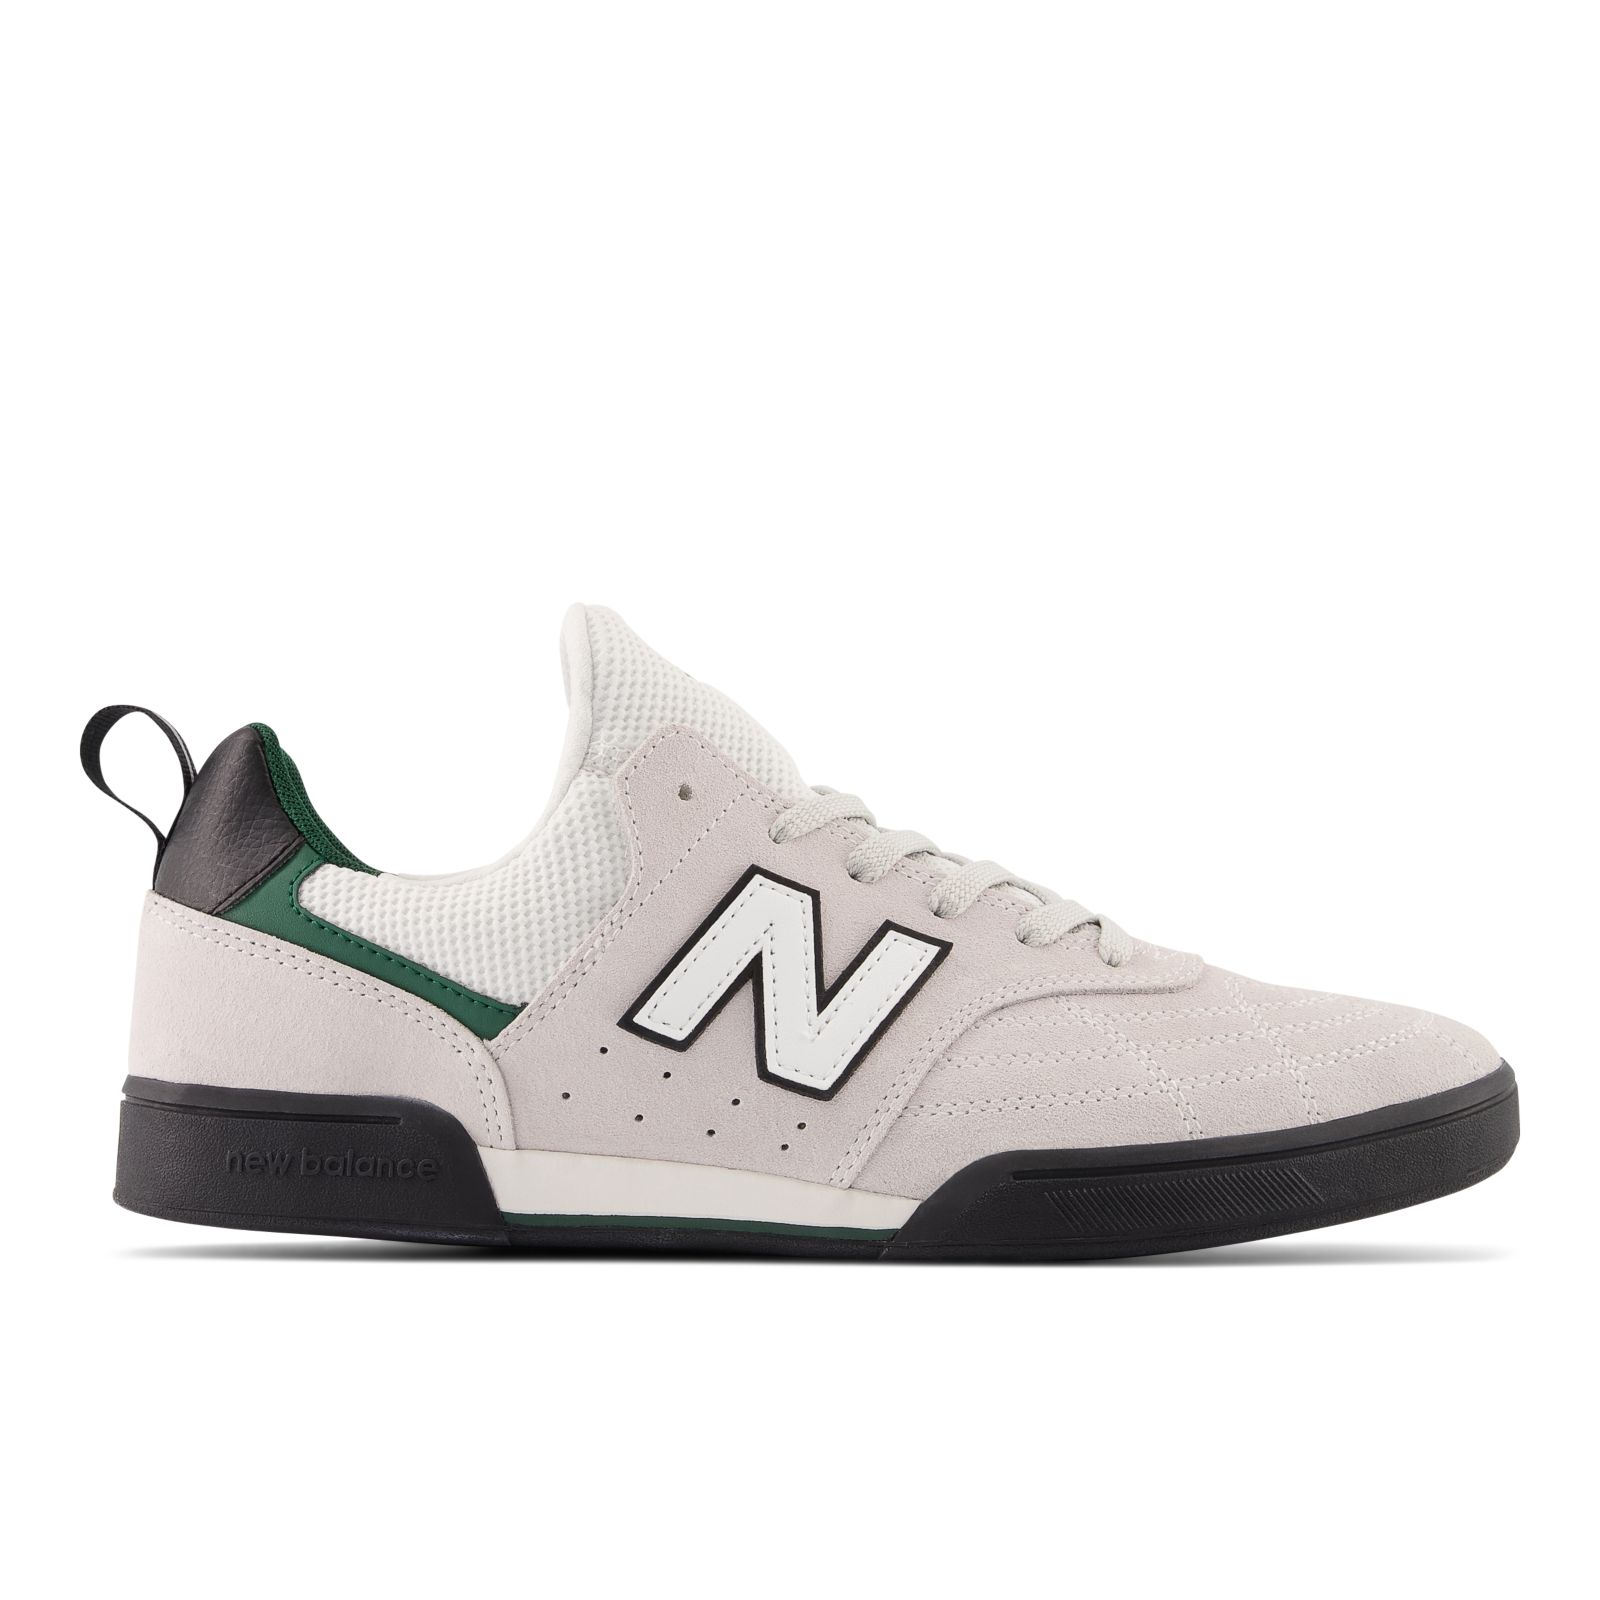 NB Numeric 288 Sport Shoes - New Balance